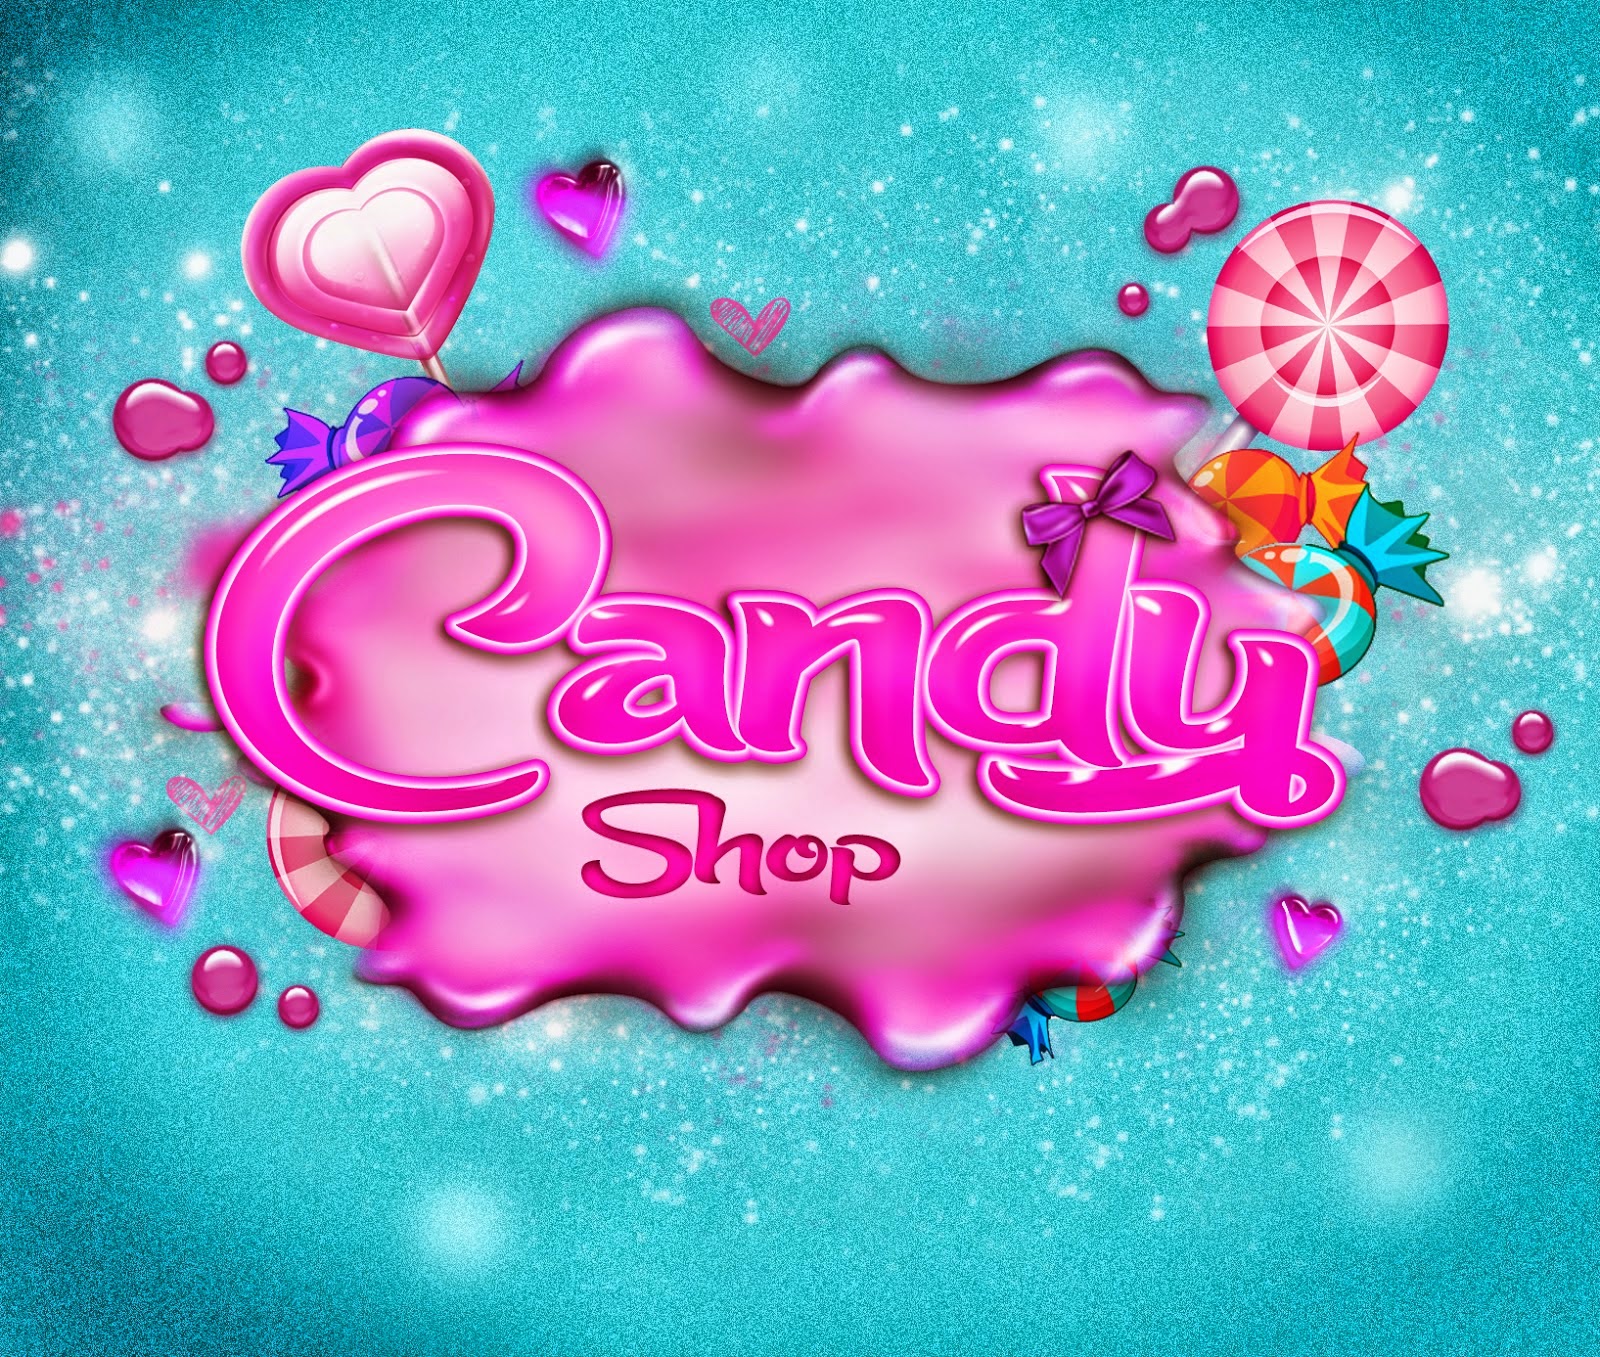 Candy shop 2. Candy shop картинки. Candy shop логотип. Candy shop надпись. Candy shop вывеска.